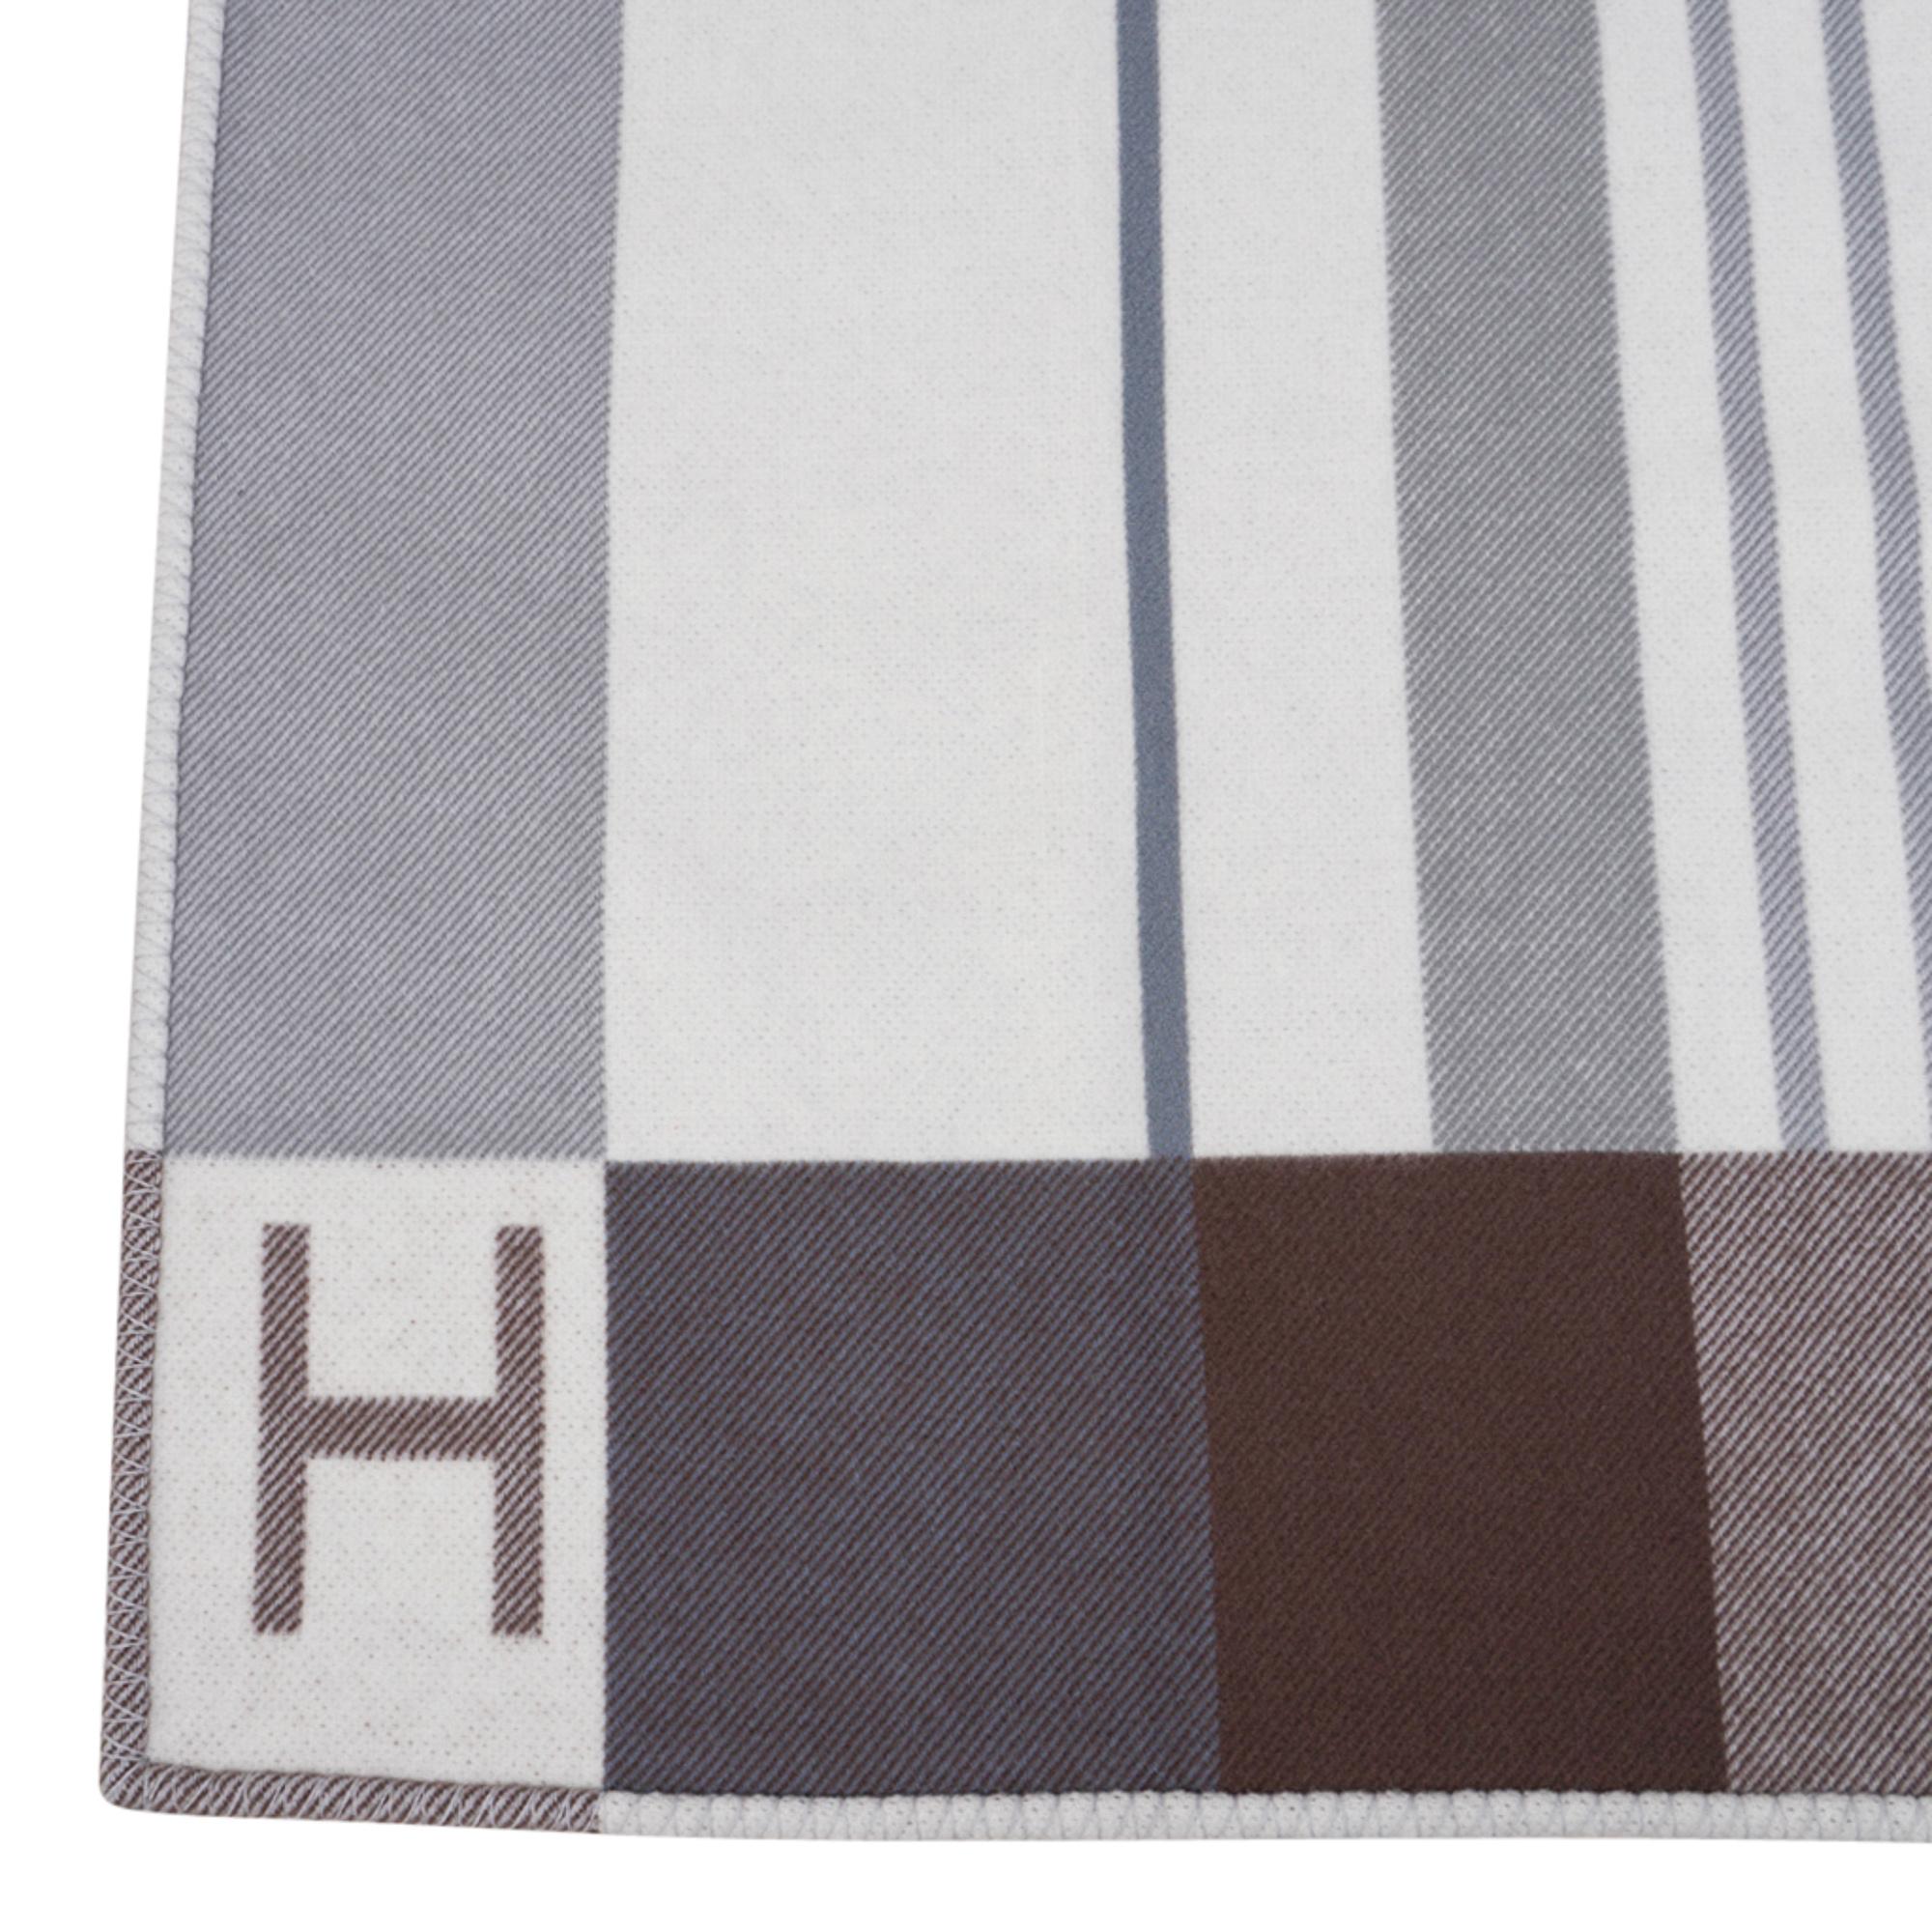 Gray Hermes Avalon Vibration Throw Blanket Gris / Ecru Wool / Cashmere New